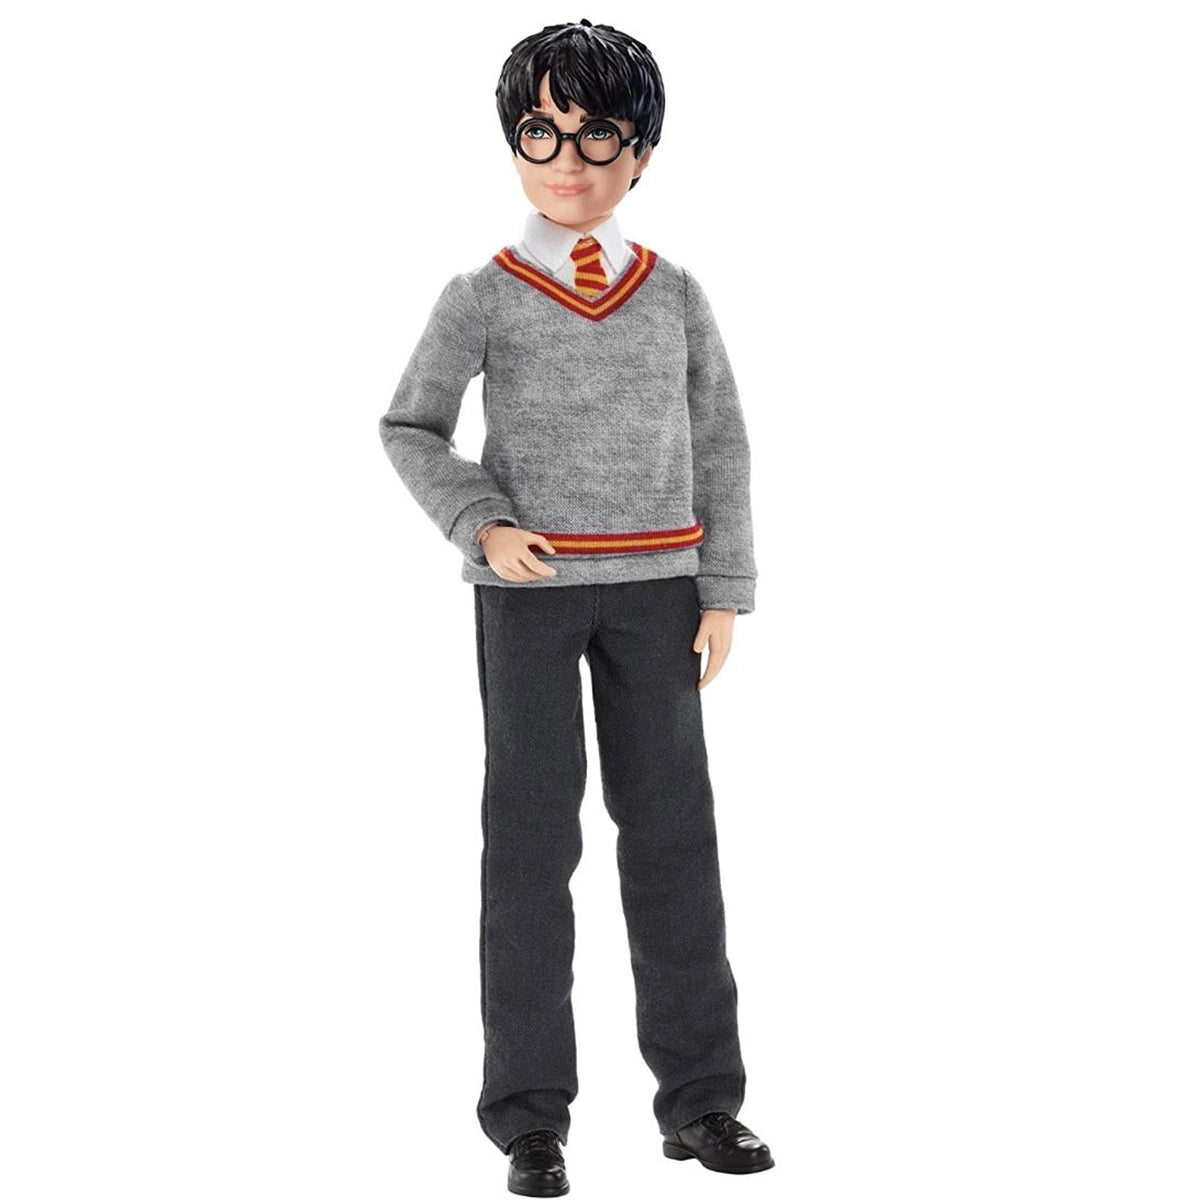 Harry Potter Koleksiyon Bebekler Harry Potter FYM50 | Toysall